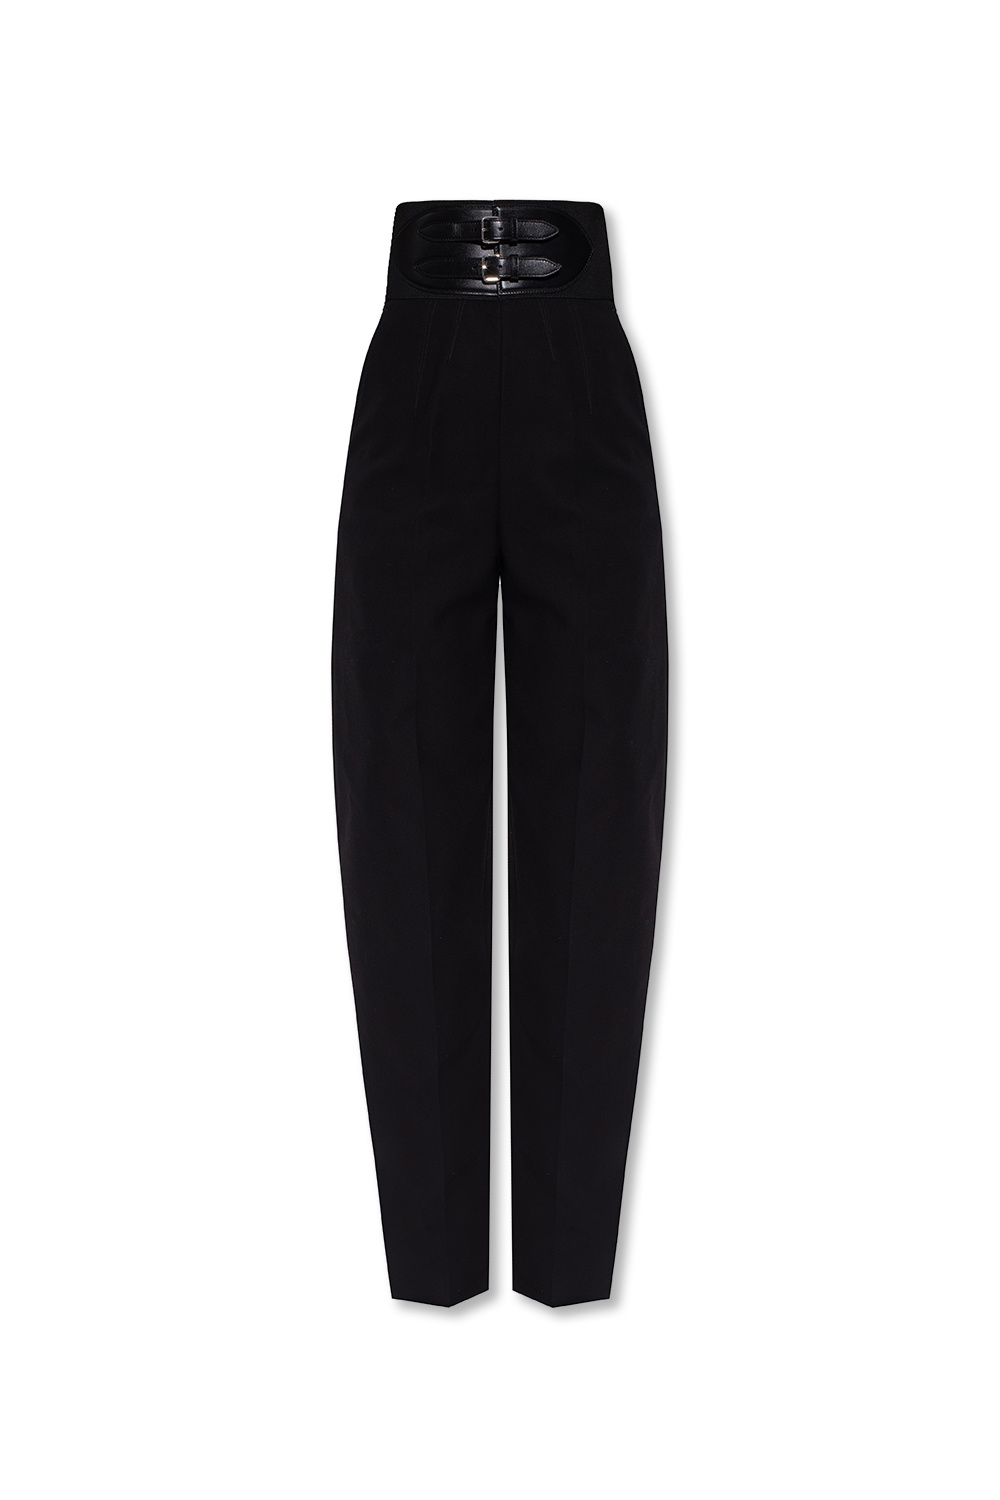 ALAIA ALAÏA Embroidered Legging In Black for Women